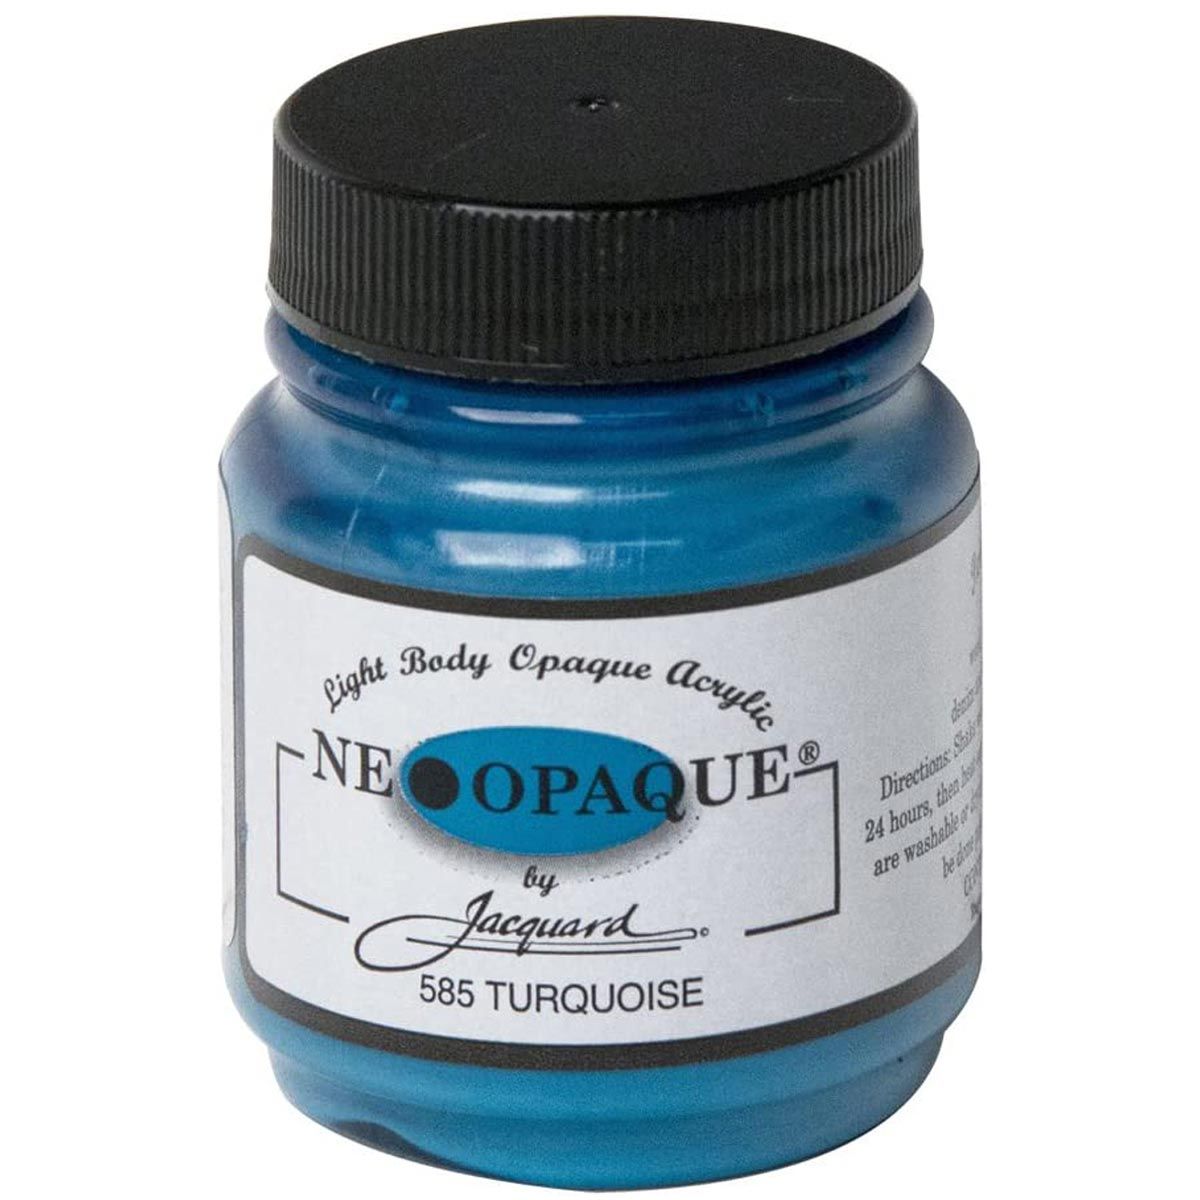 Jacquard Neopaque Acrylic 585 Turquoise 2.25 oz